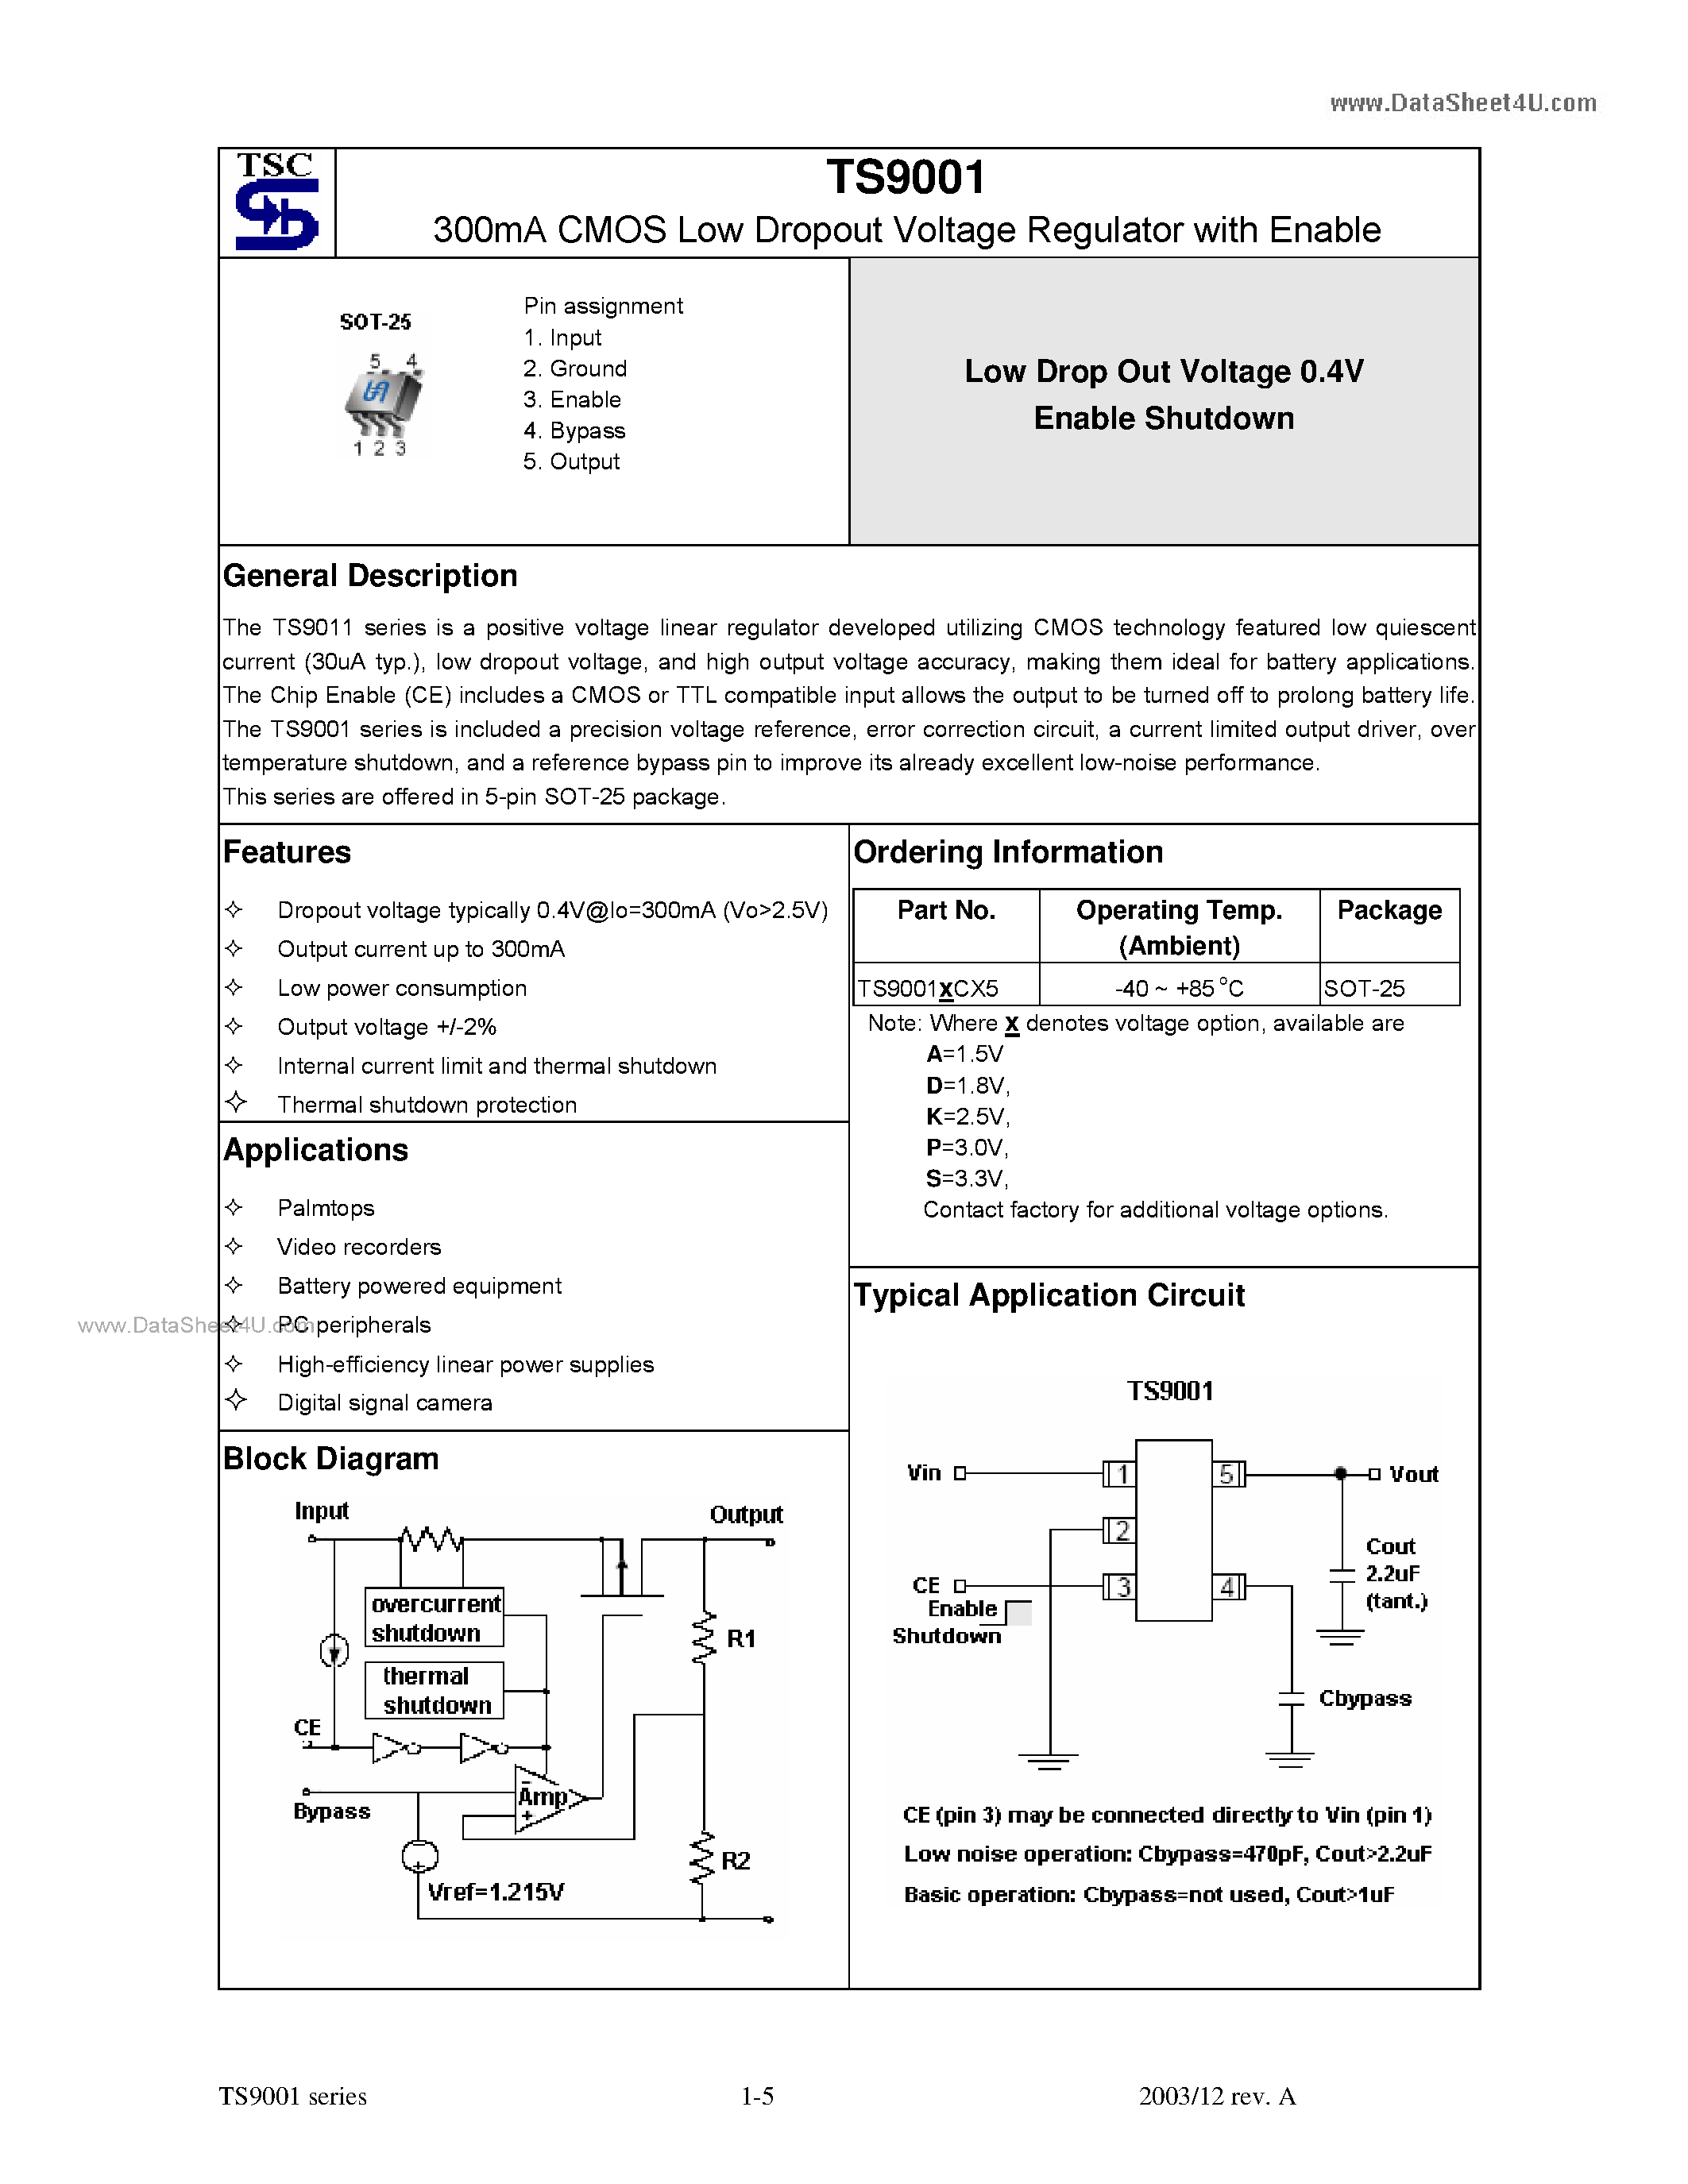 Даташит TS9001 - 300mA CMOS Low Dropout Voltage Regulator страница 1